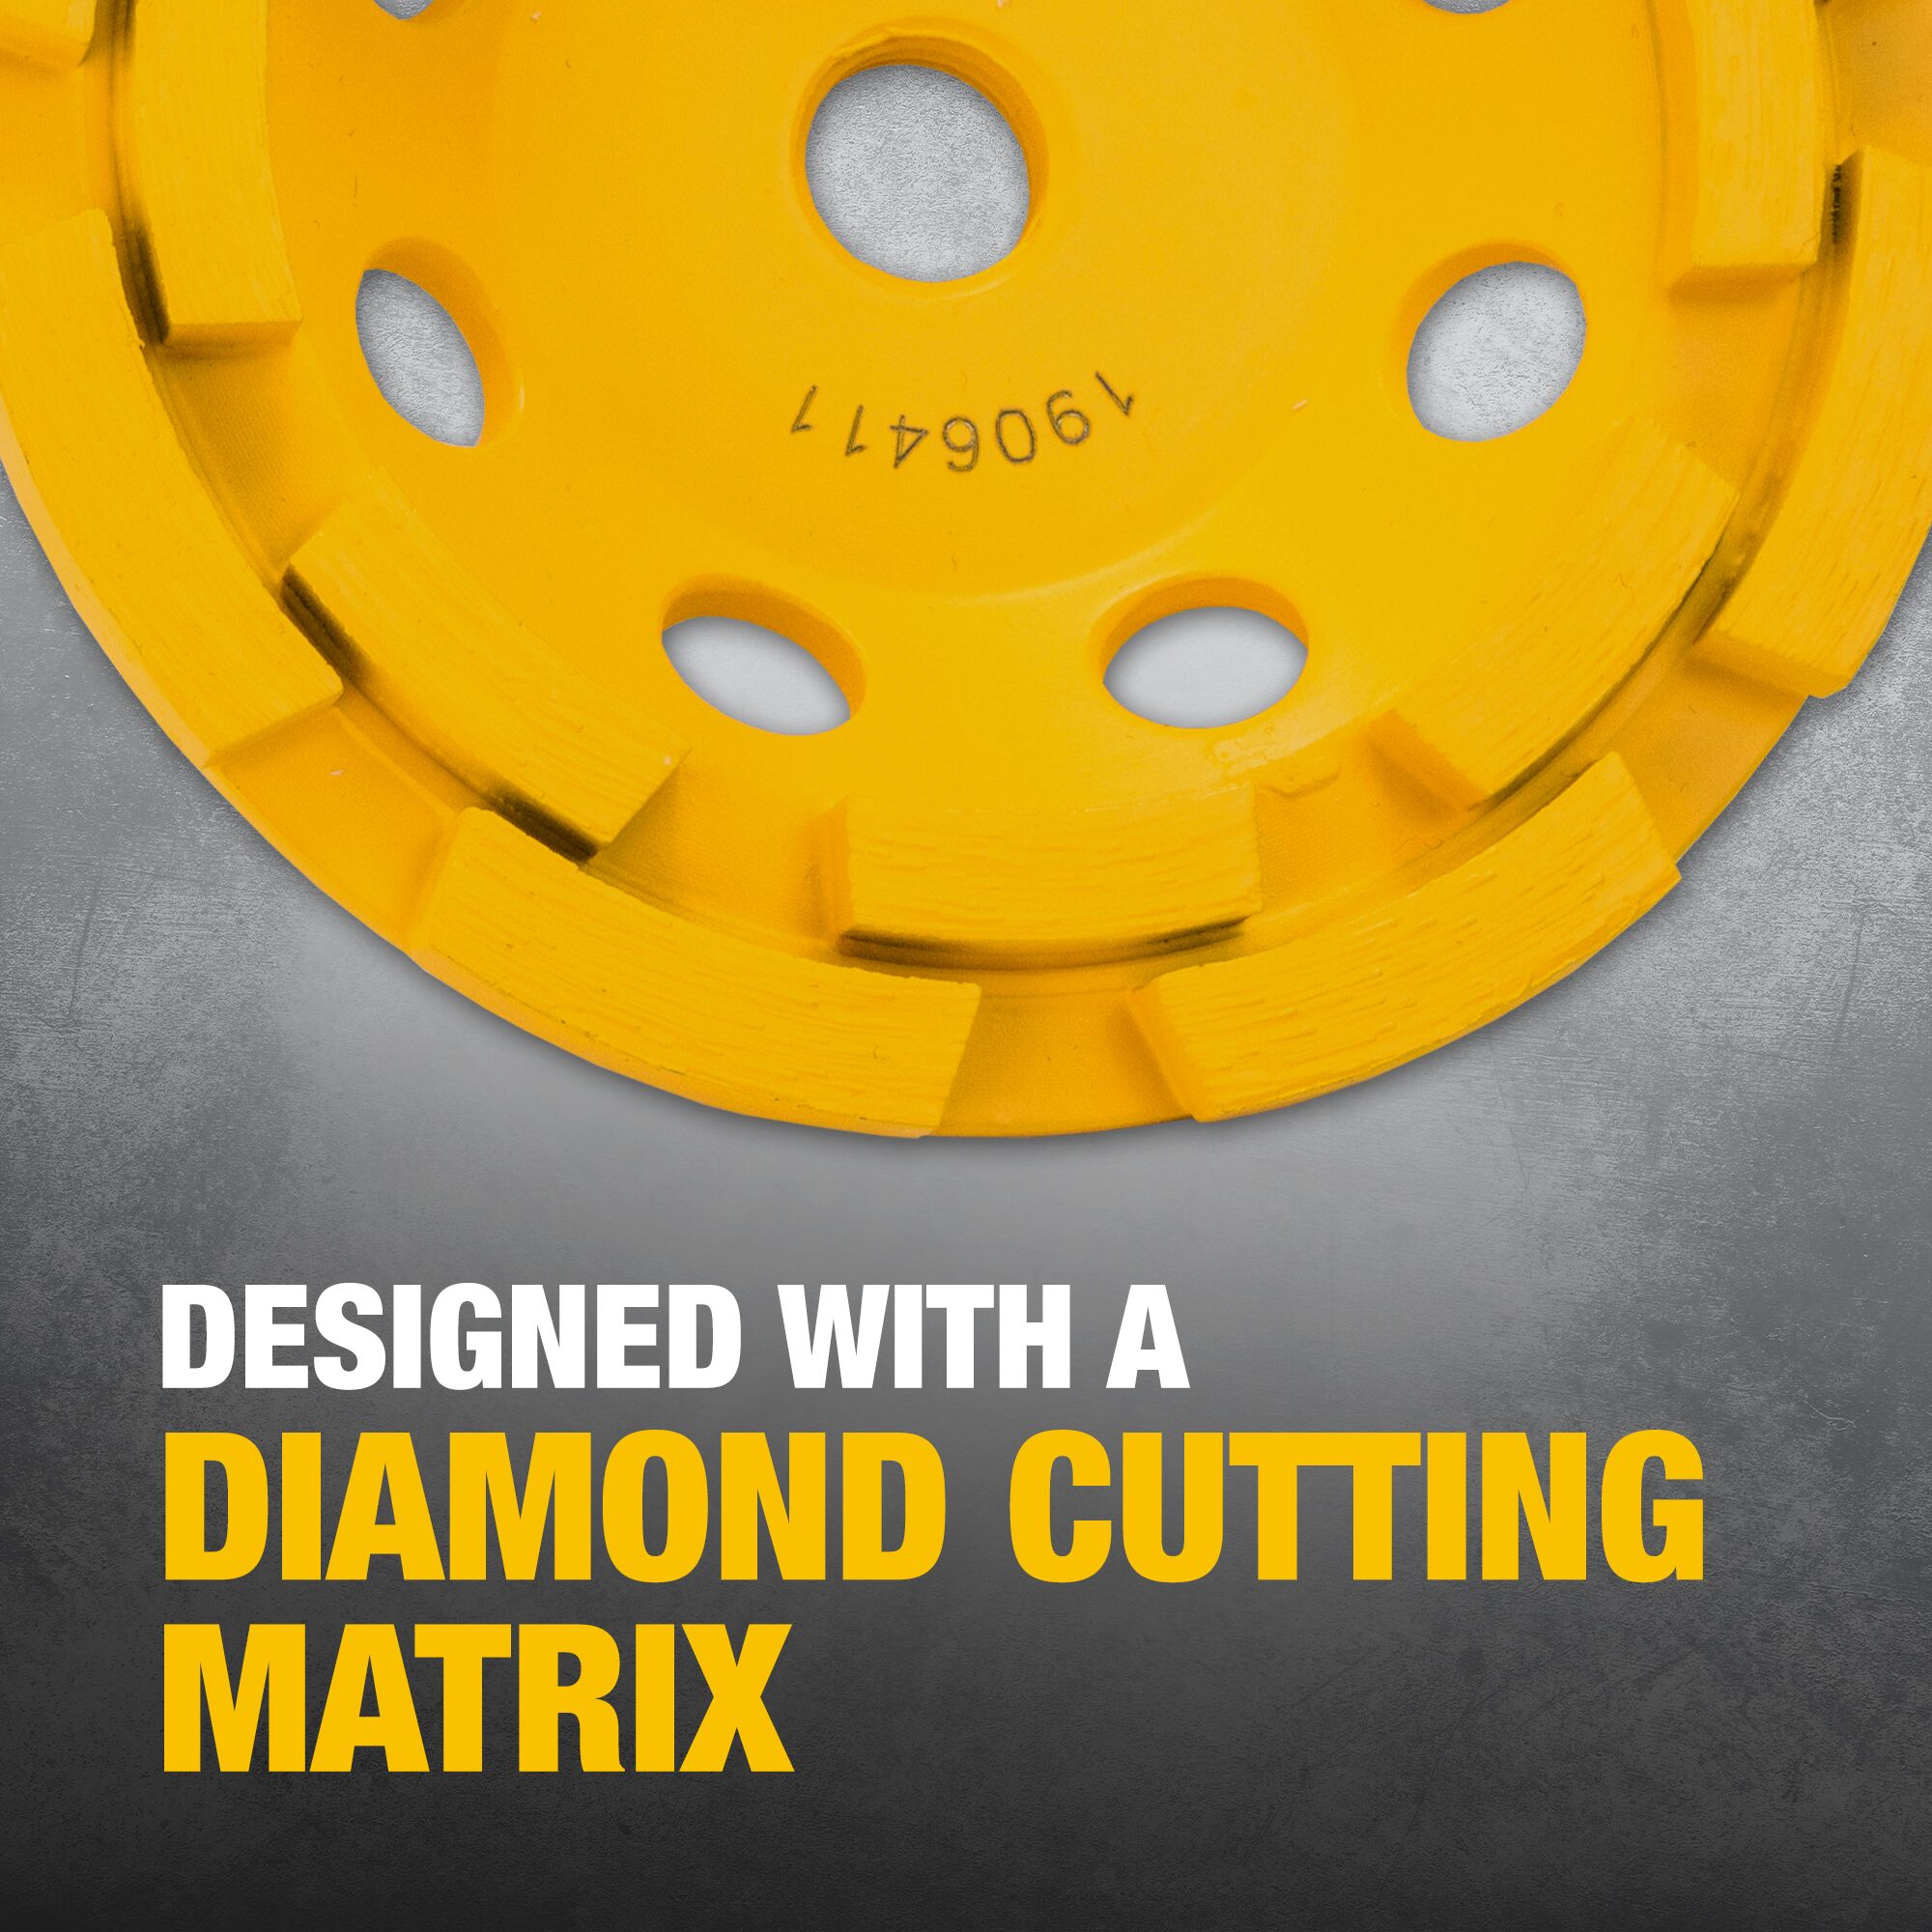 DEWALT 4-1/2 Double Row Diamond Cup Grinding Wheel Blister – The